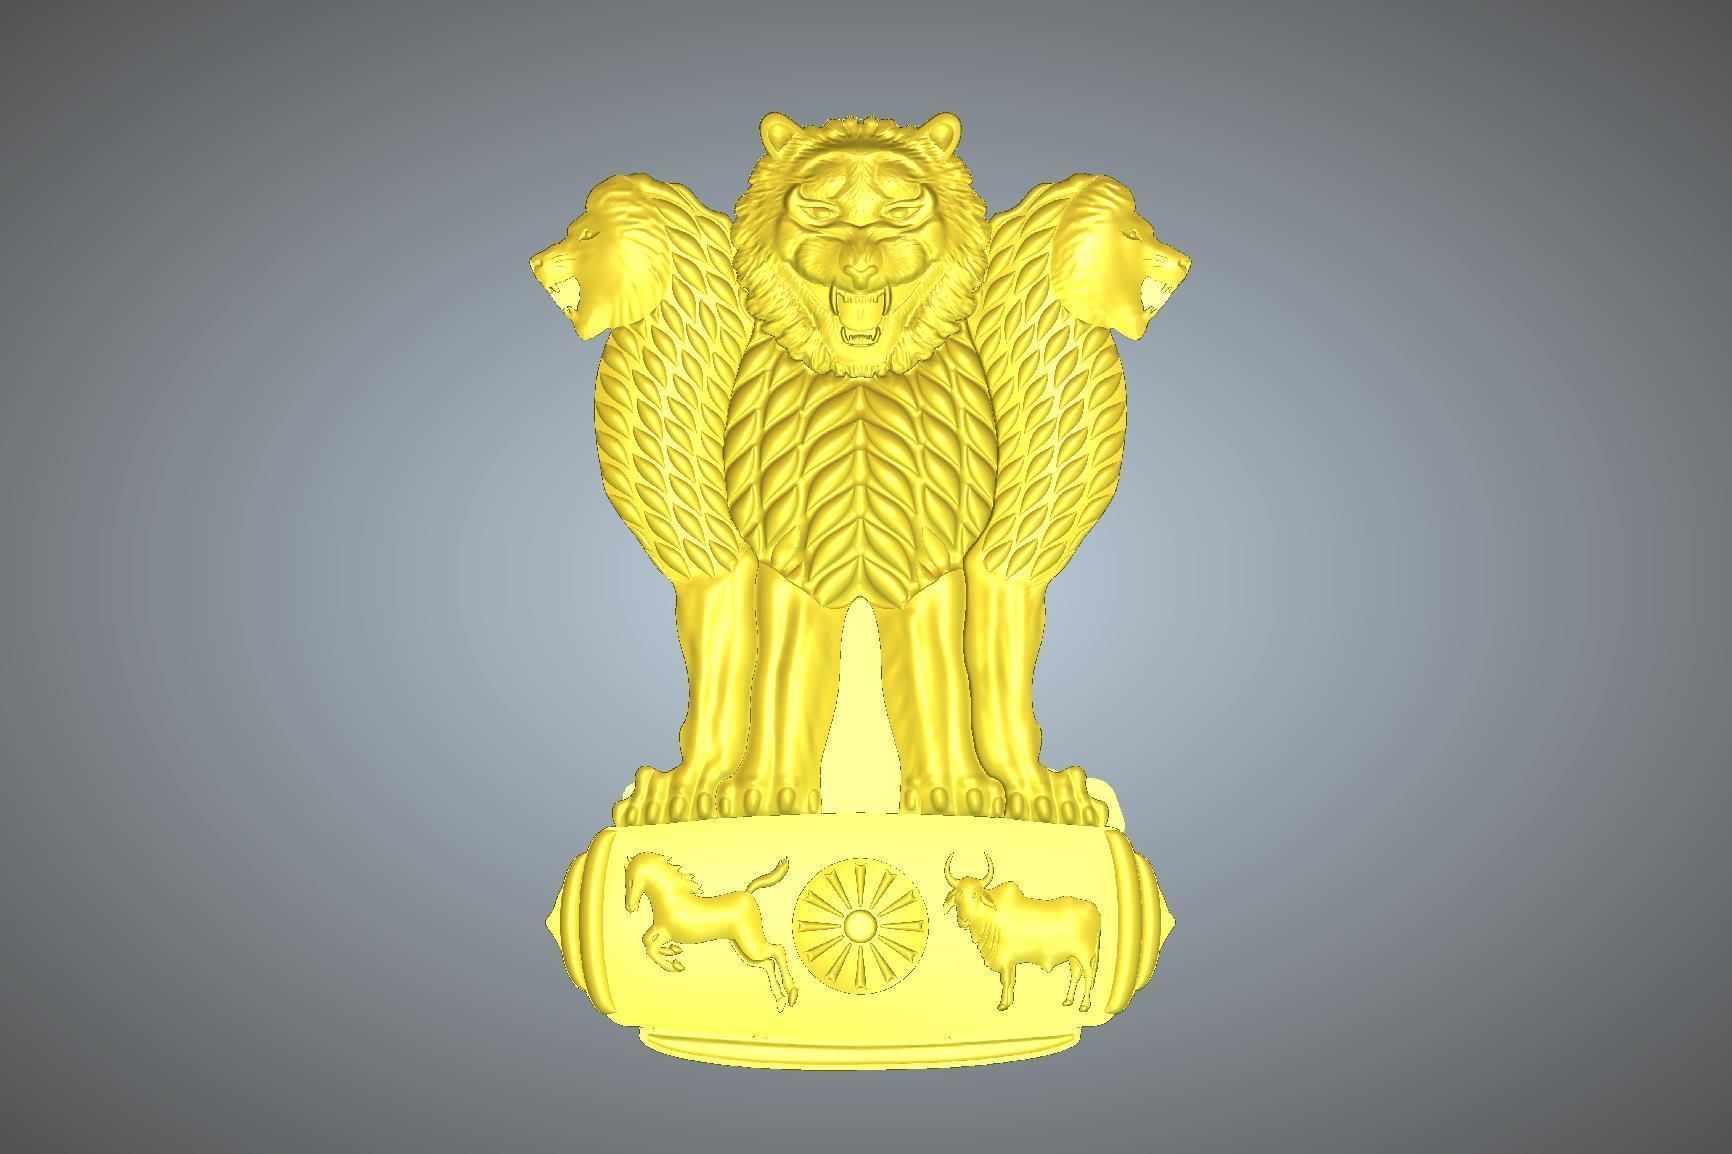 National Emblem of India - Satyamev Jayate Free Vector Download | FreeImages